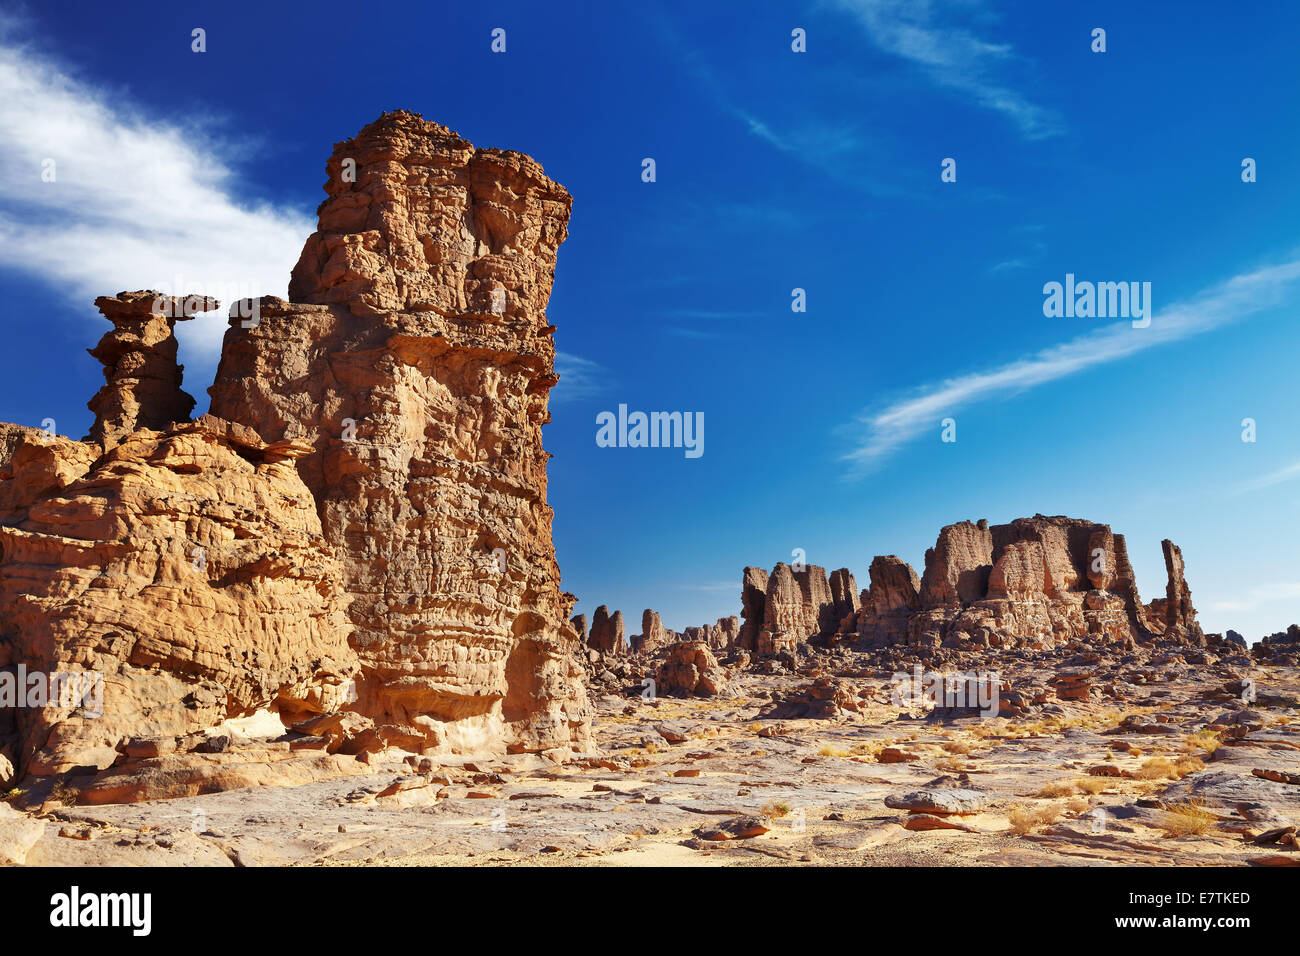 Falaises de grès bizarres en désert du Sahara, Tassili N'Ajjer, Algérie Banque D'Images